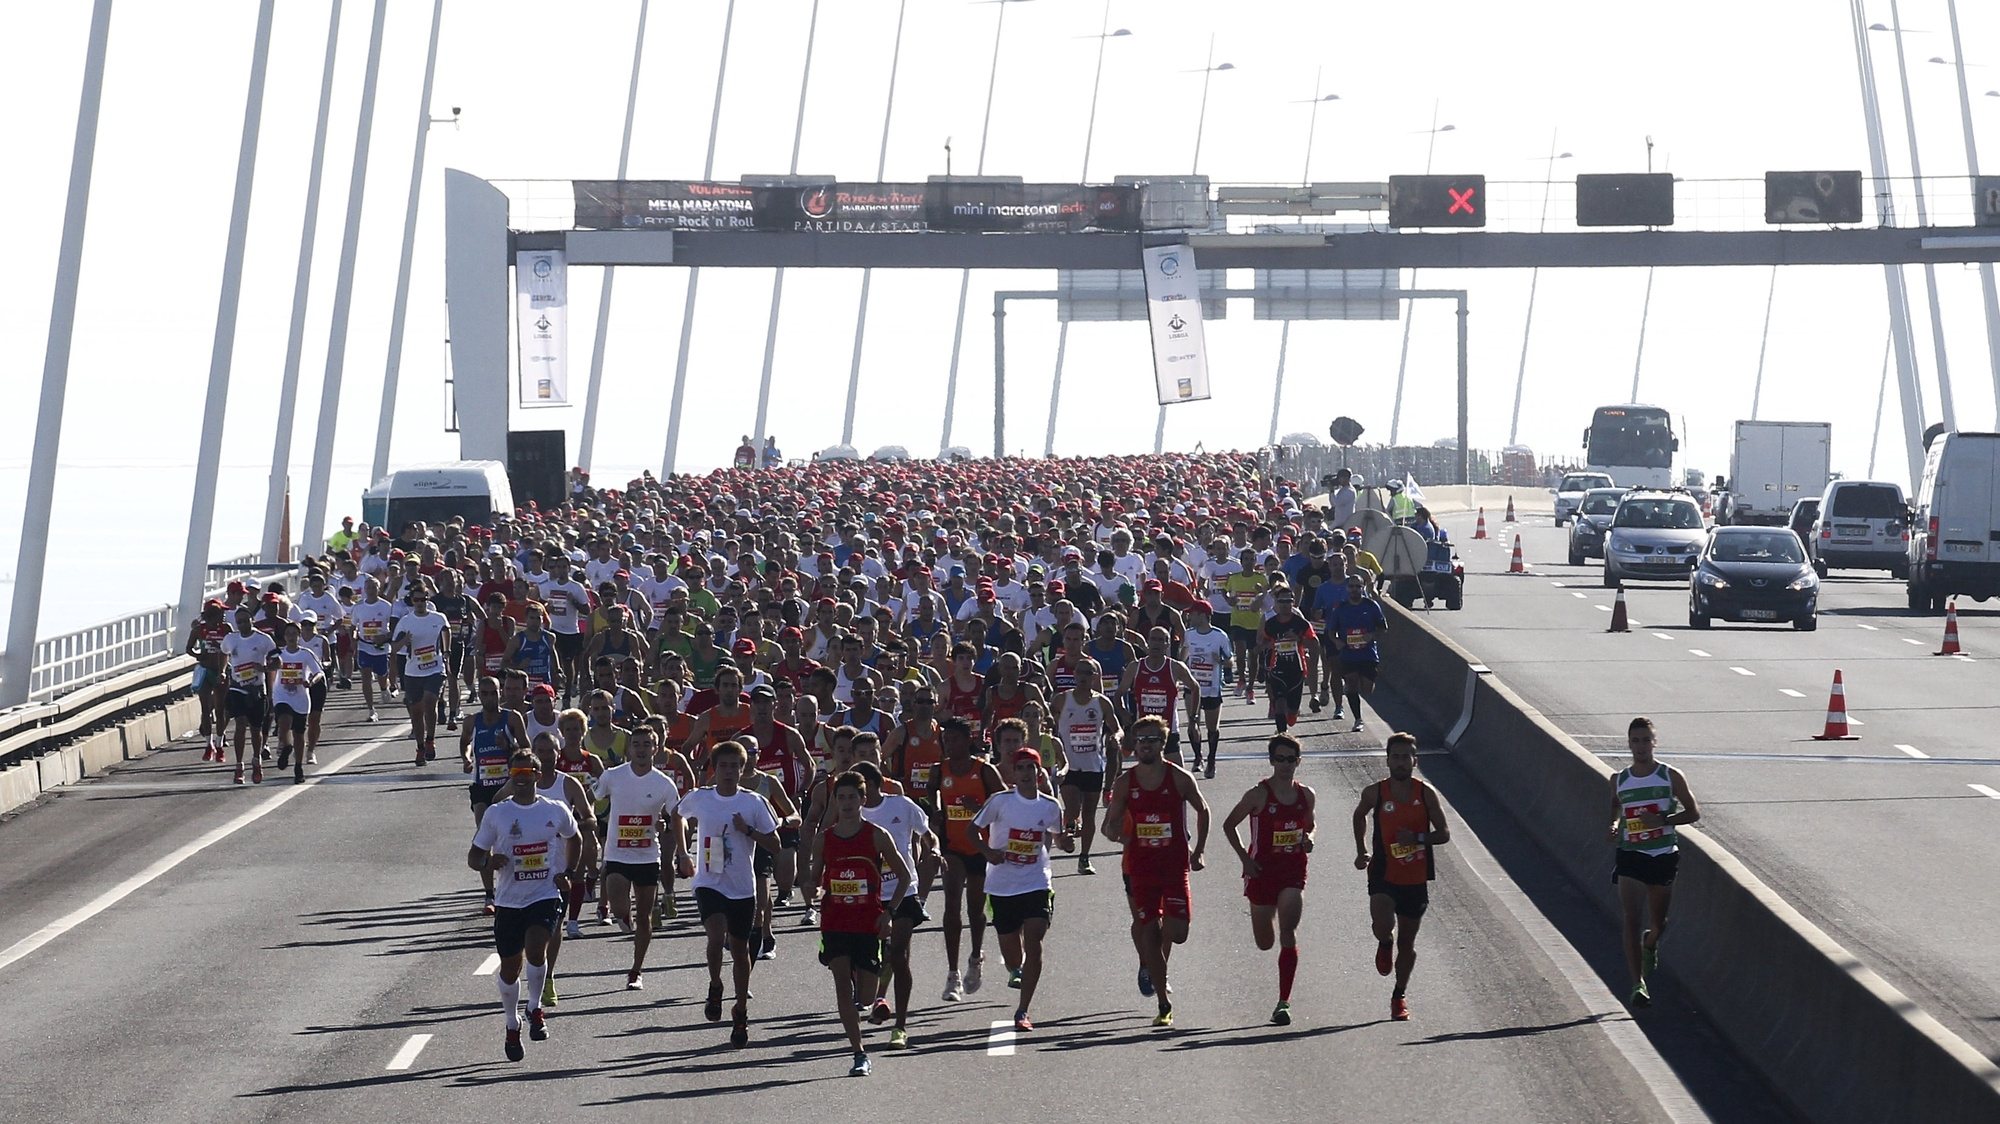 Athletes running on the Lisbon Half Marathon, on October 6, 2013. The Lisbon Half Marathon is 21 km long between Vasco da Gama bridge and Parque das Nacoes in Lisbon. PEDRO NUNES / LUSA